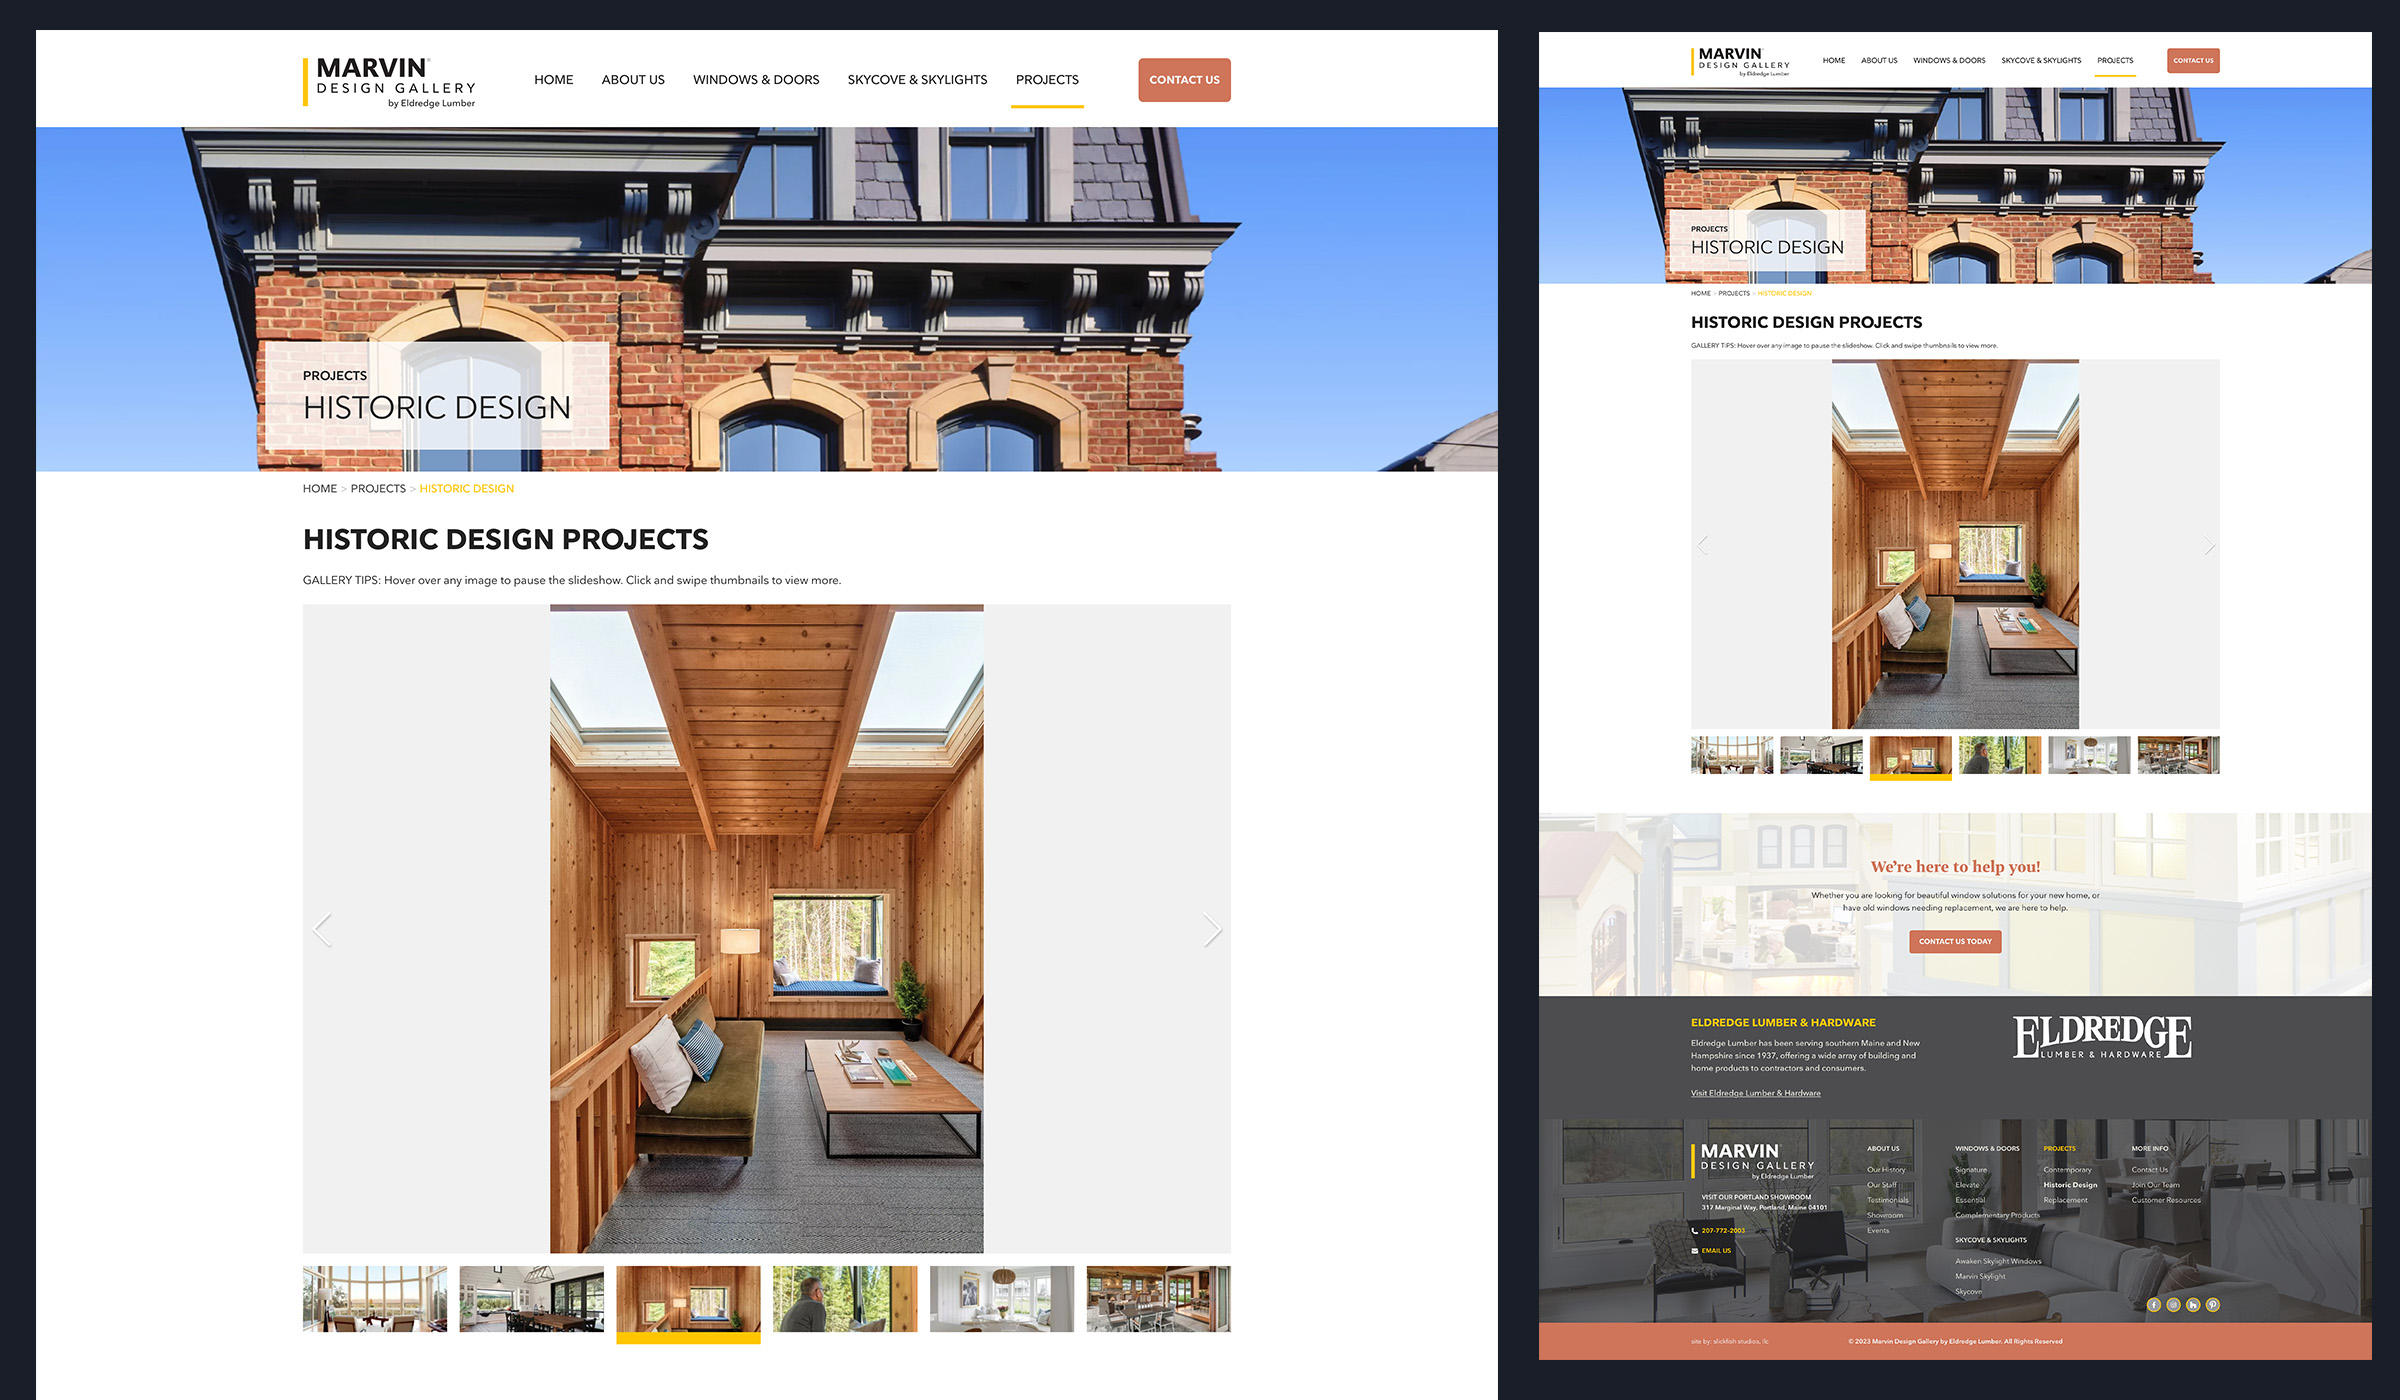 Marvin Design Gallery by Eldredge Historic Design. Website design by SlickFish Studios